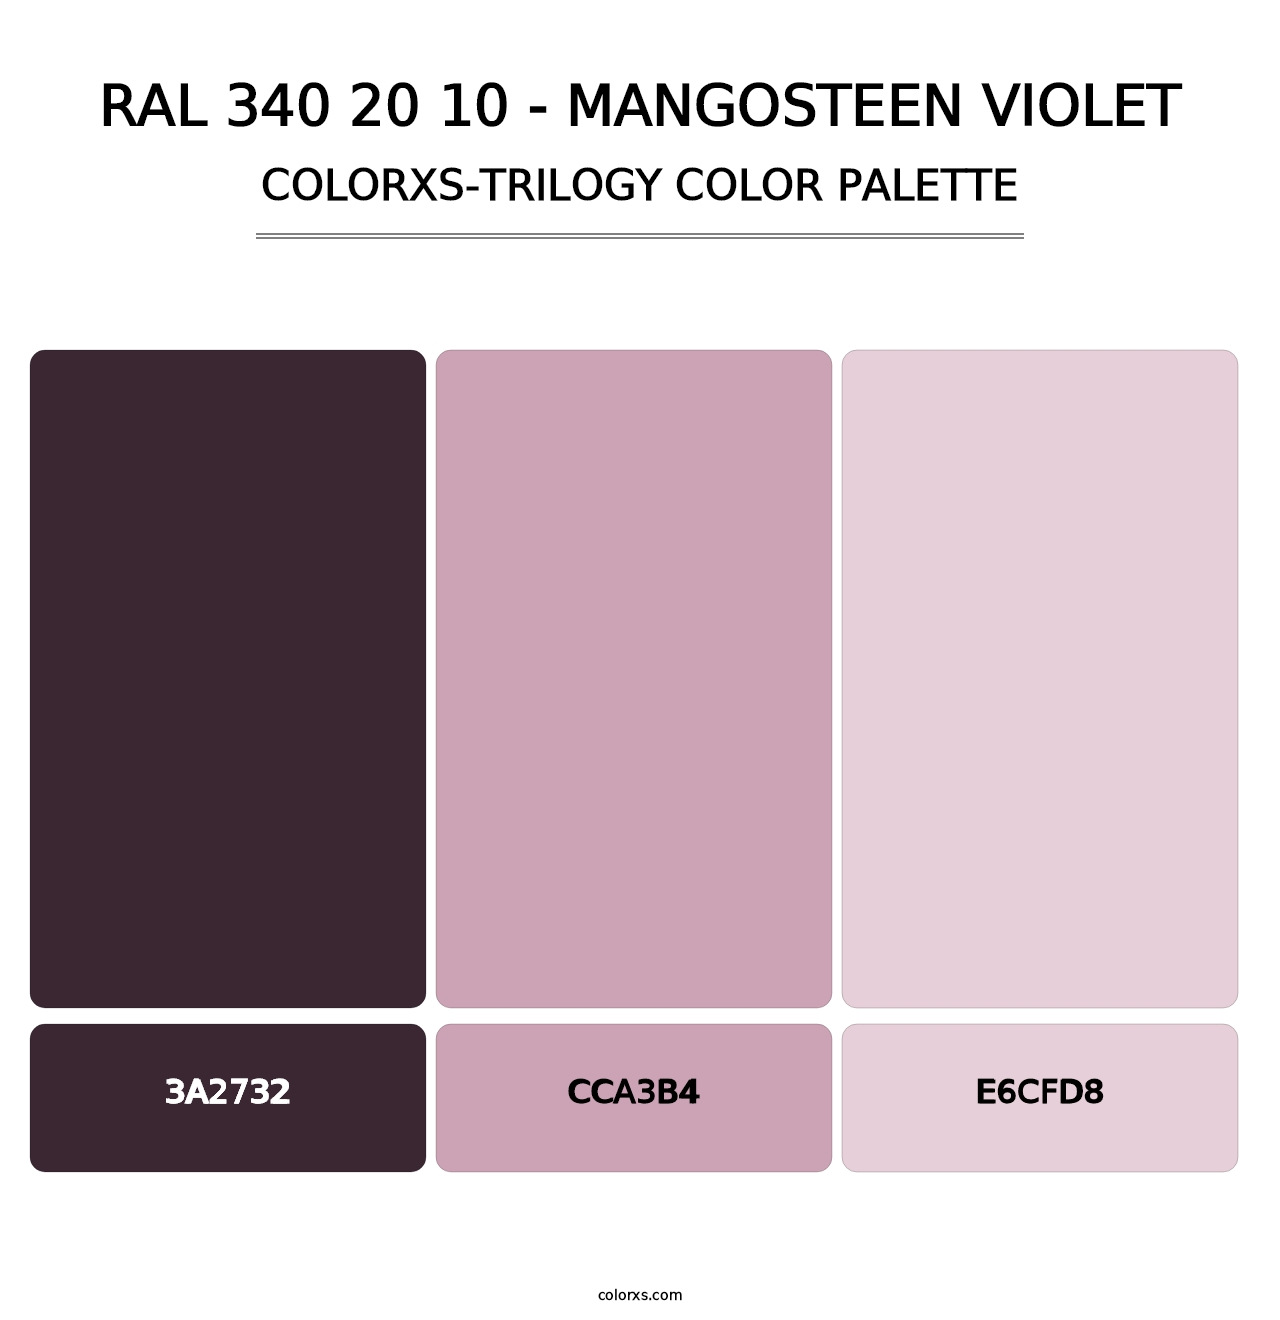 RAL 340 20 10 - Mangosteen Violet - Colorxs Trilogy Palette